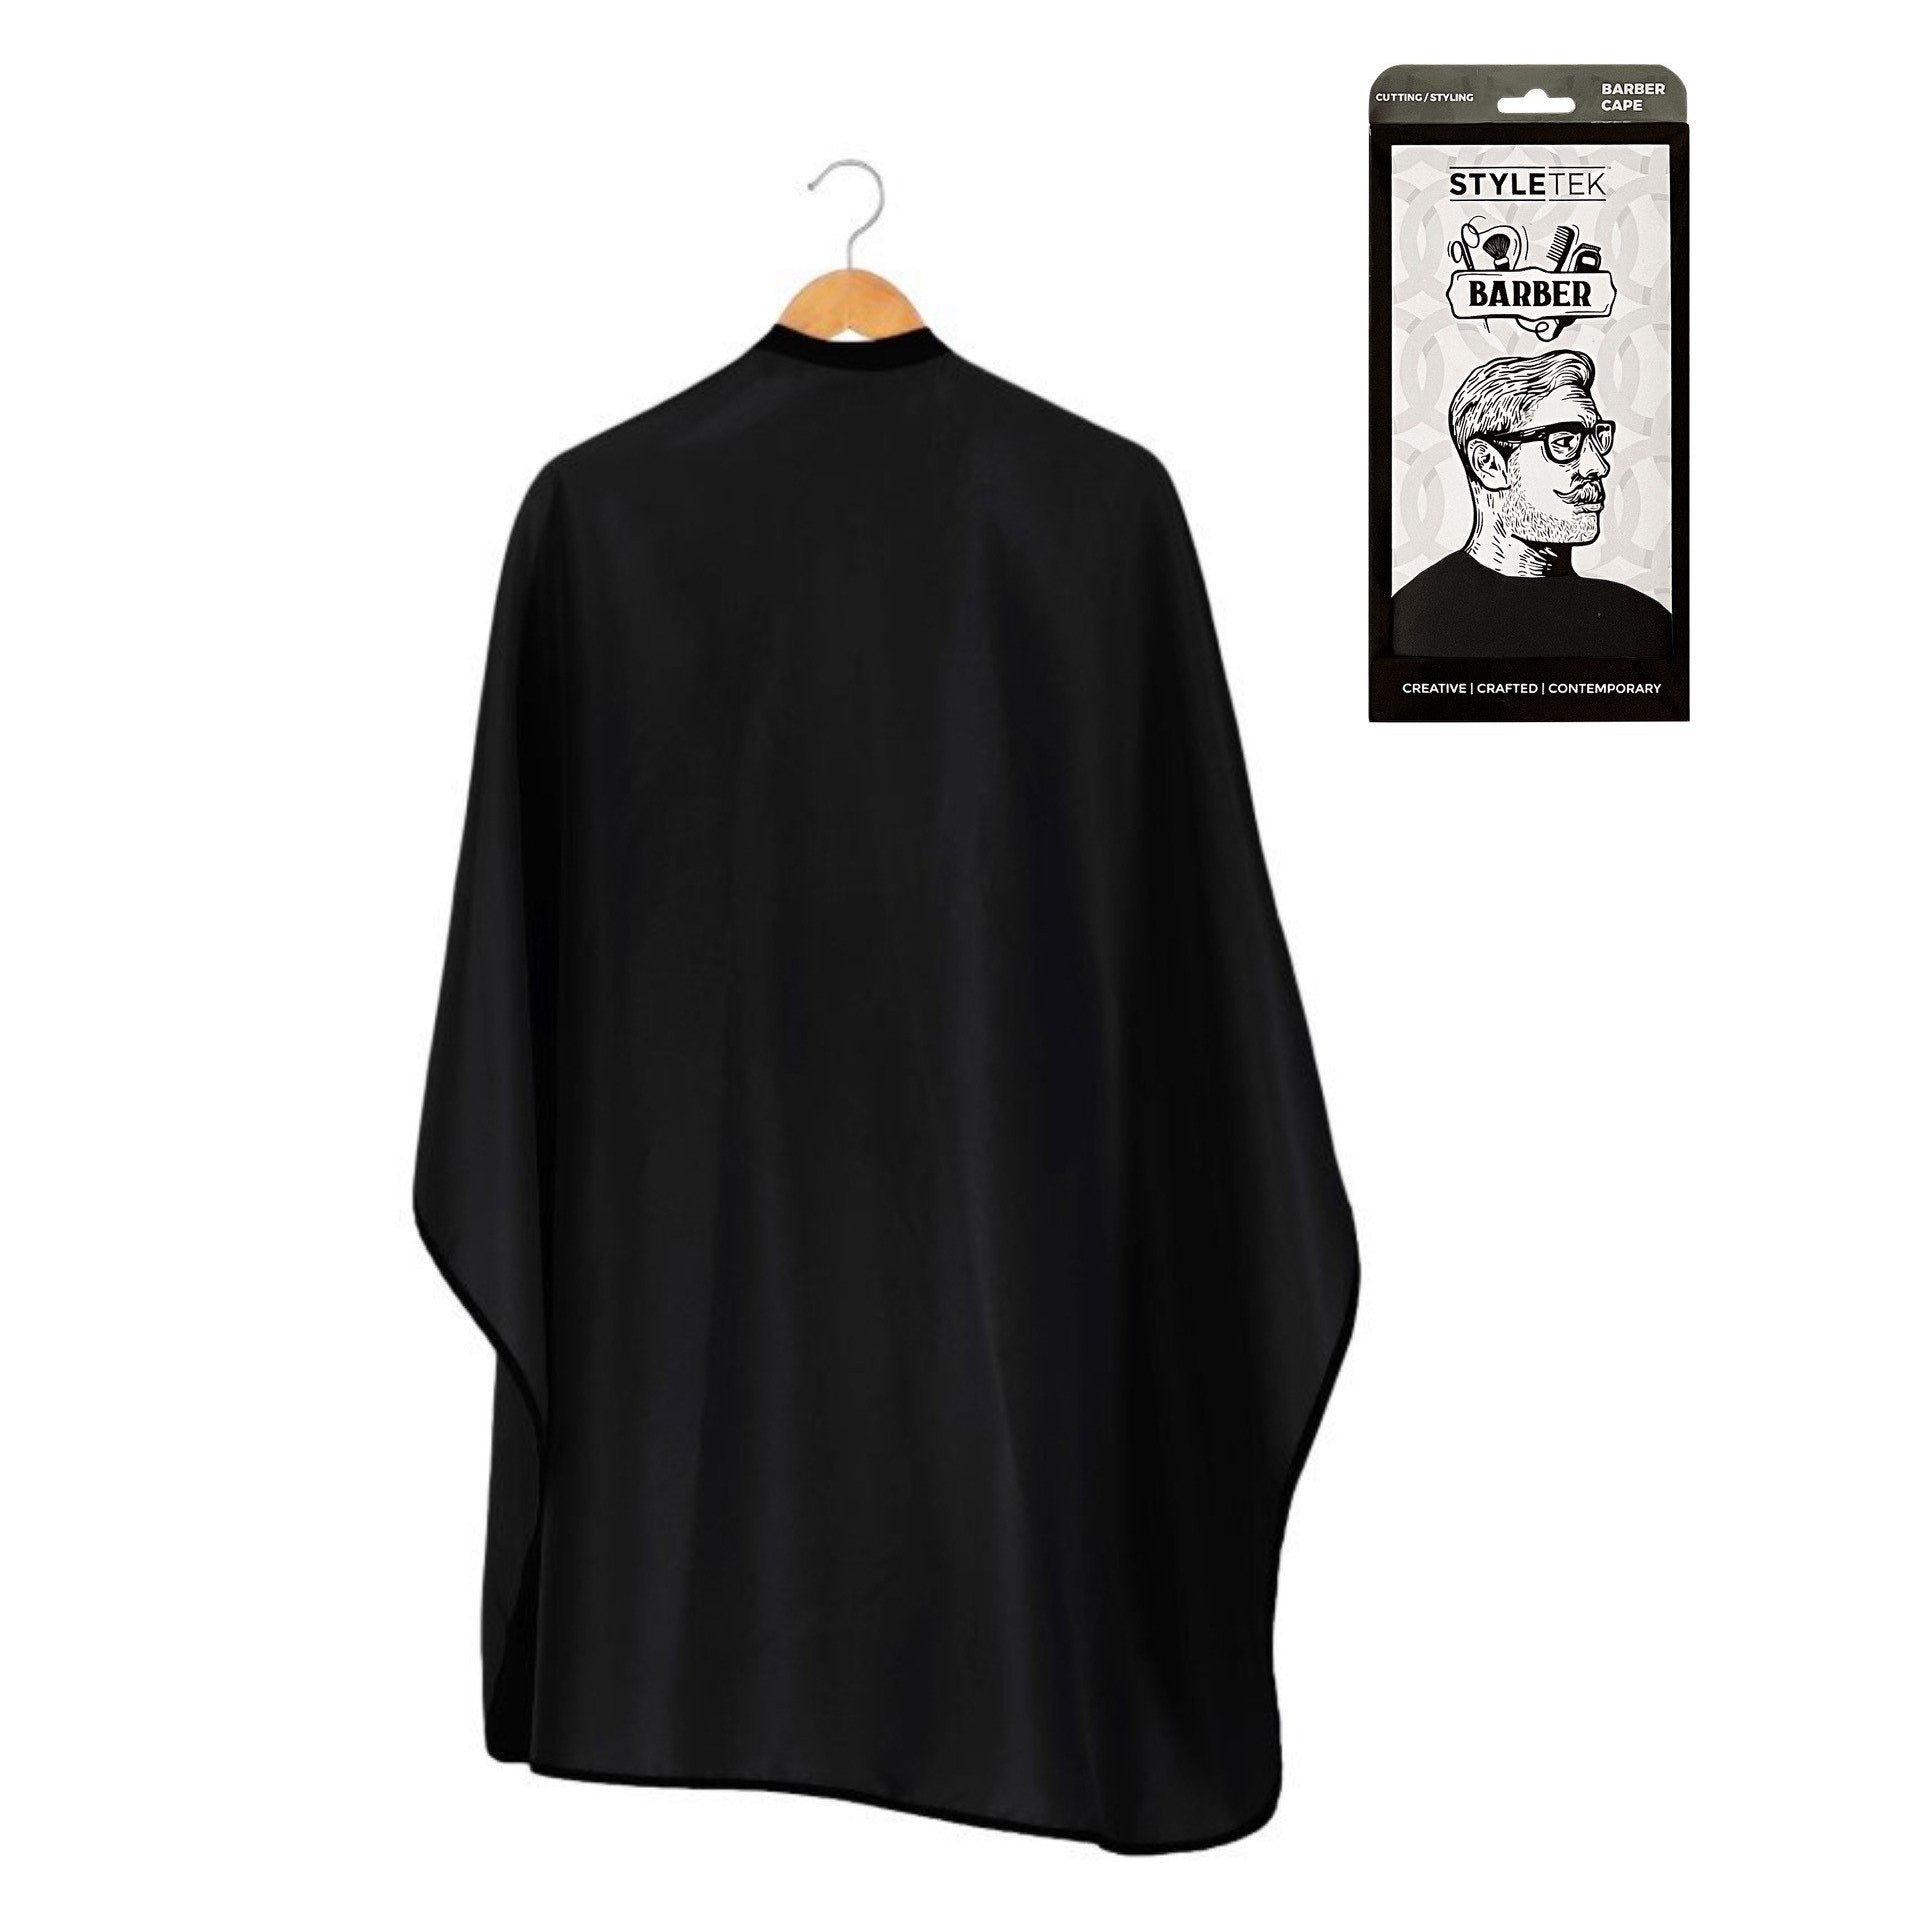 Solid Black | BARBER CAPE | STYLETEK Hairdressing Capes & Neck Covers STYLETEK 